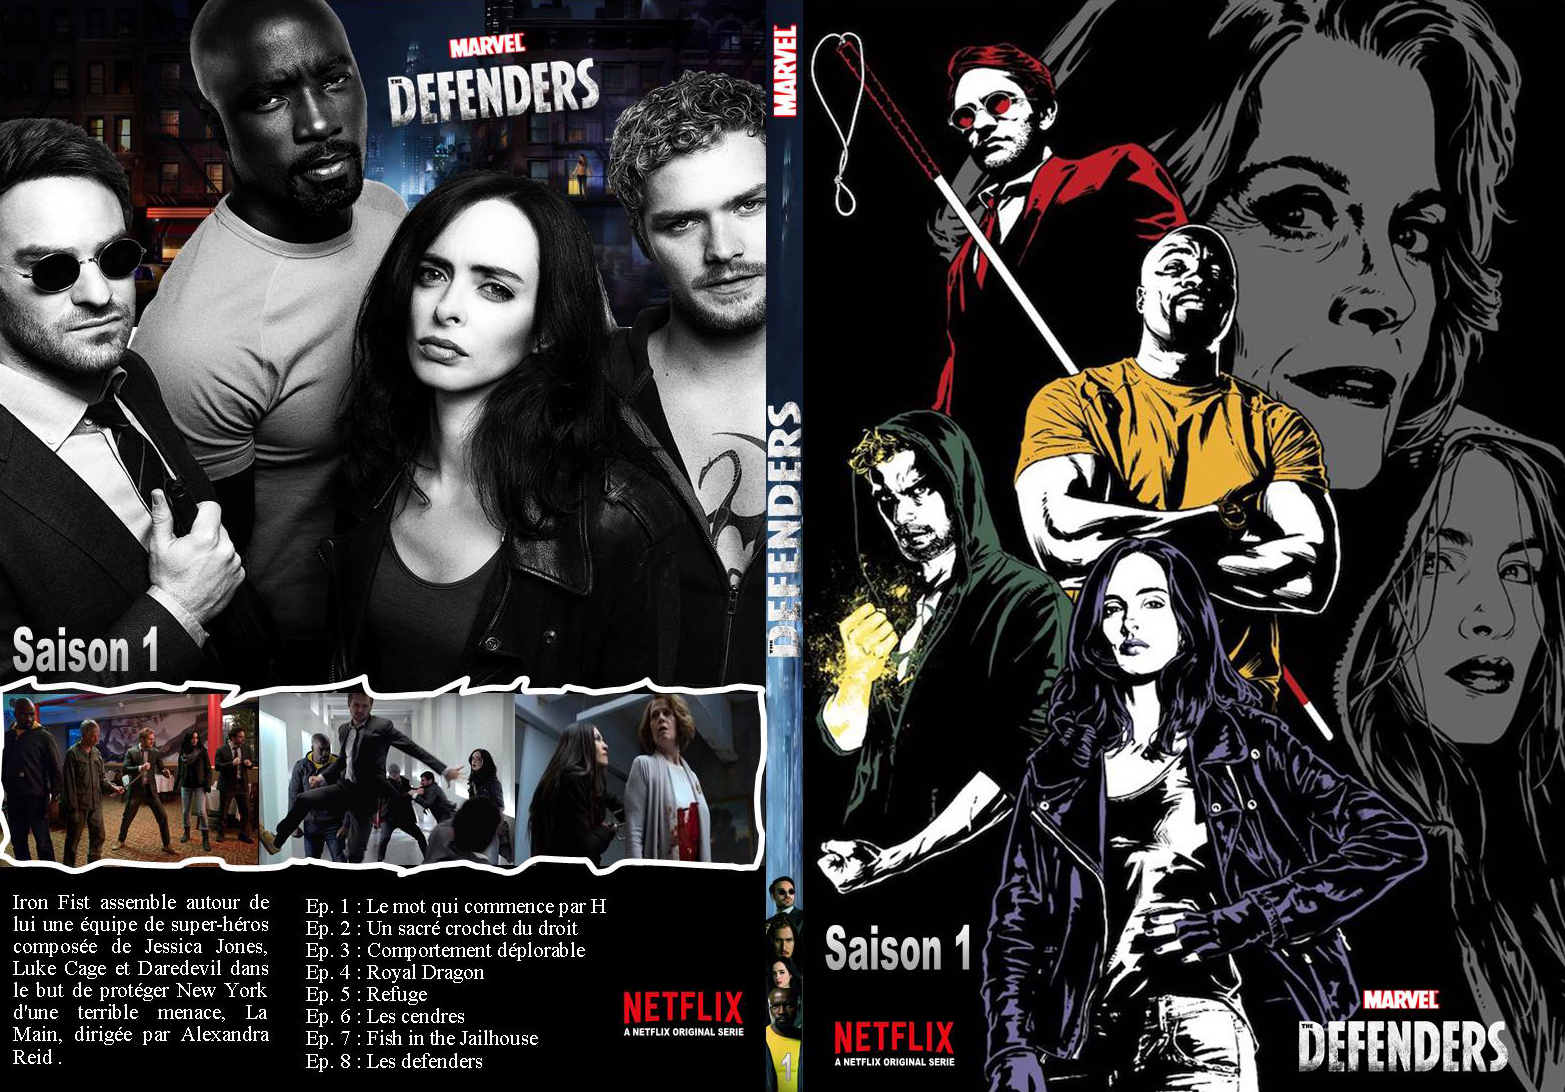 Jaquette DVD The Defenders saison 1 custom - SLIM